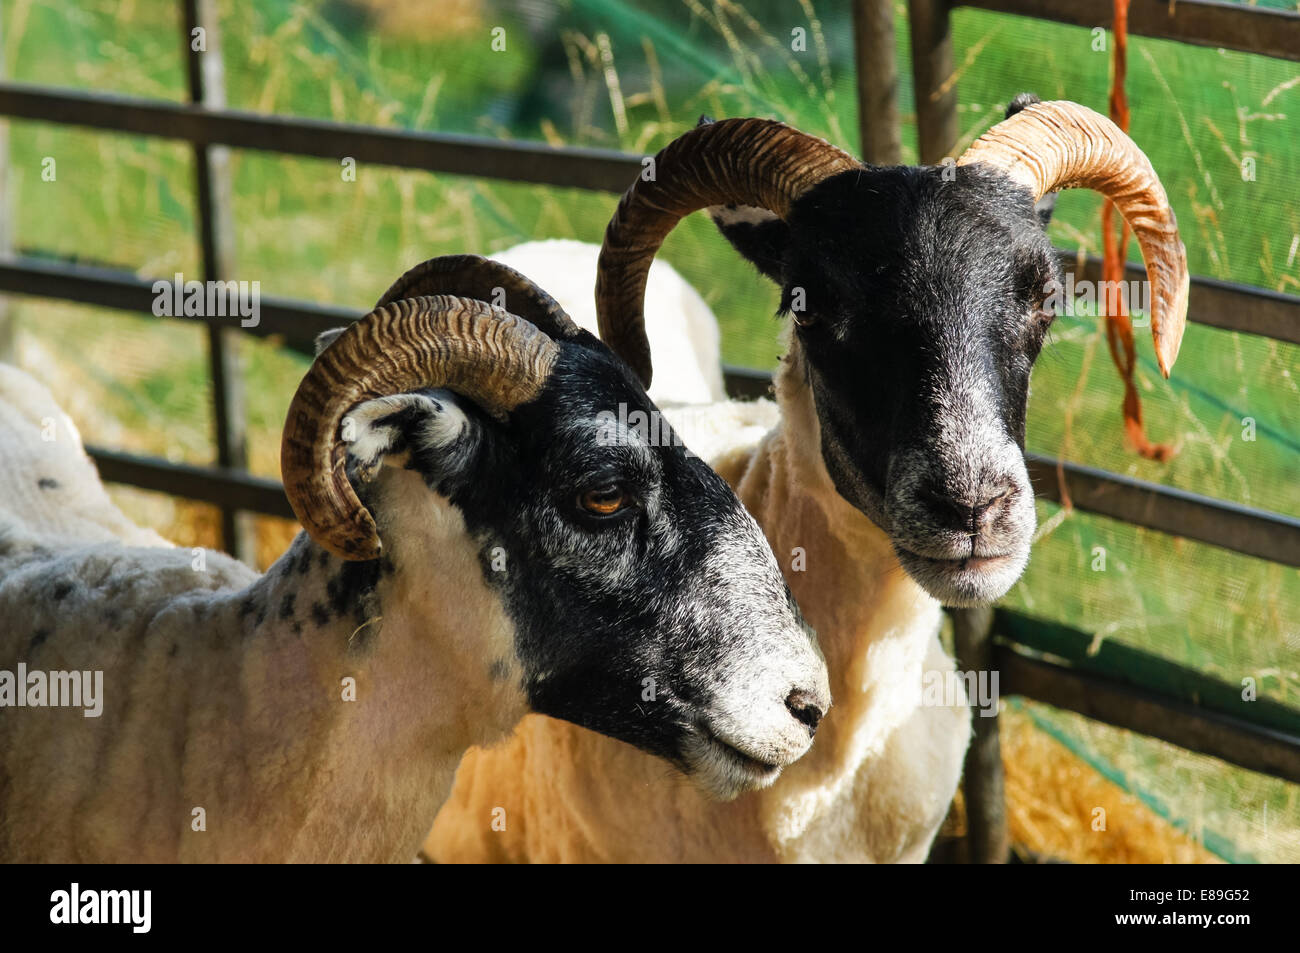 Scottish blackface sheep in enclosure Stock Photo